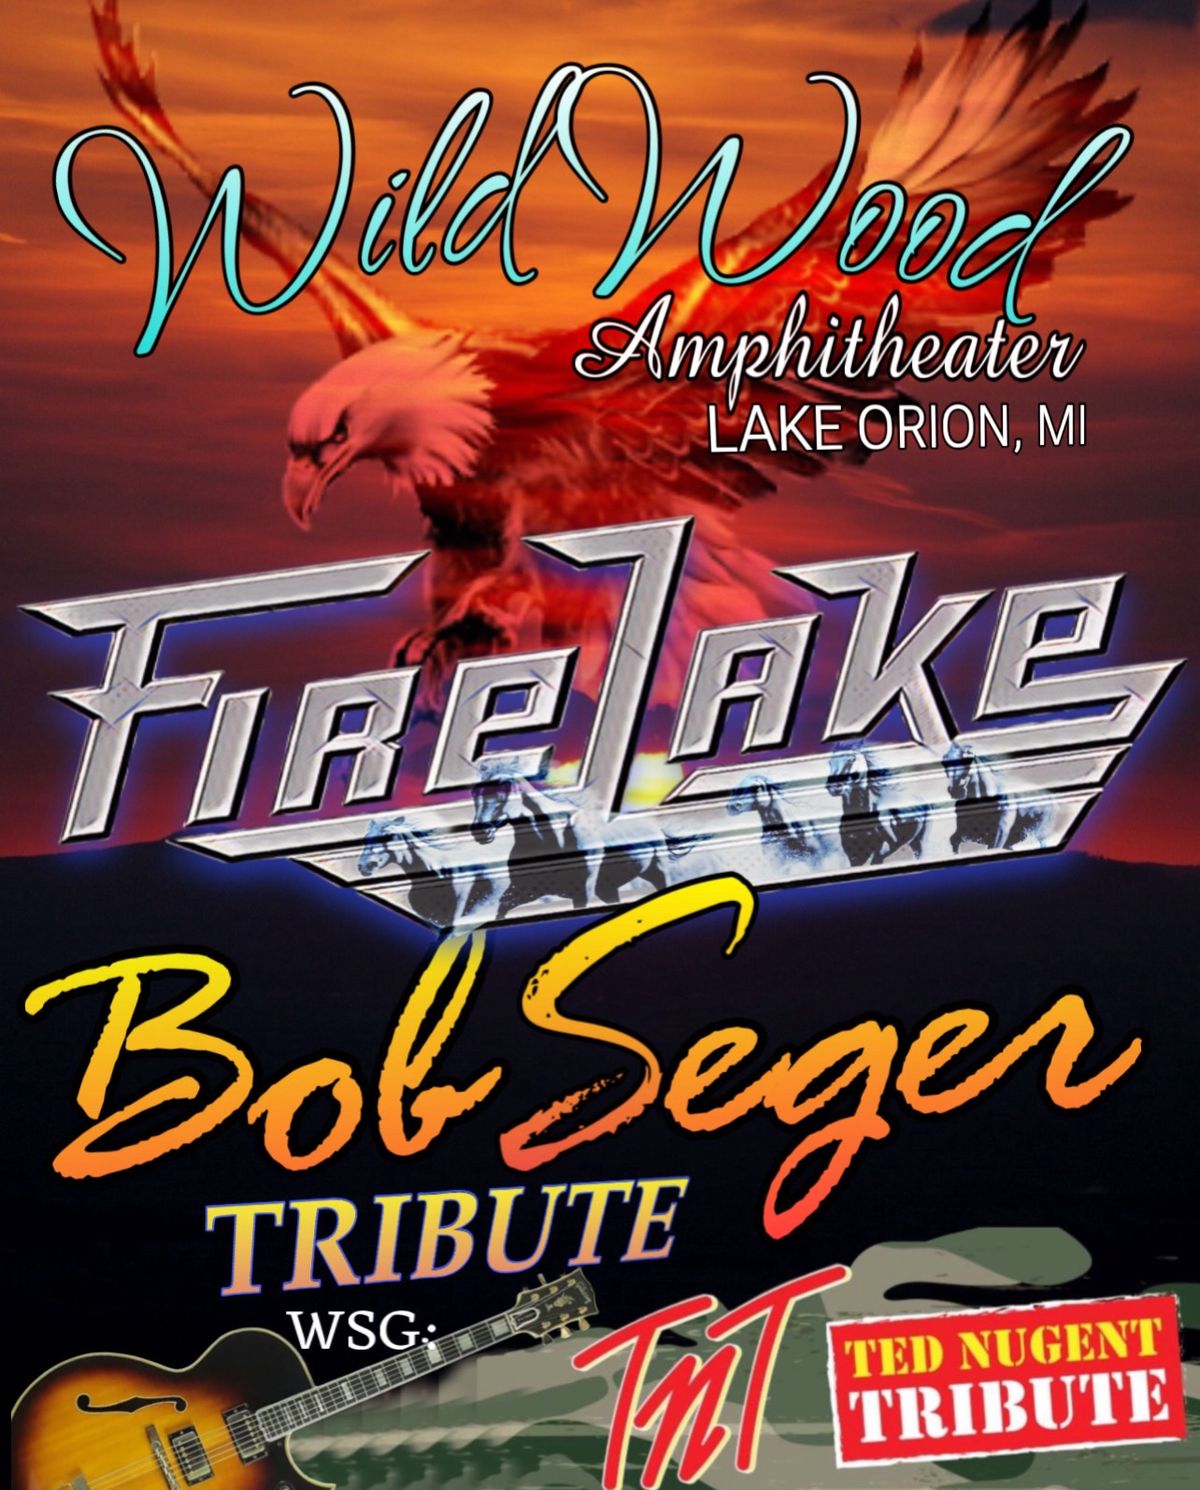 Bob Seger Tribute Fire Lake and Wildwood